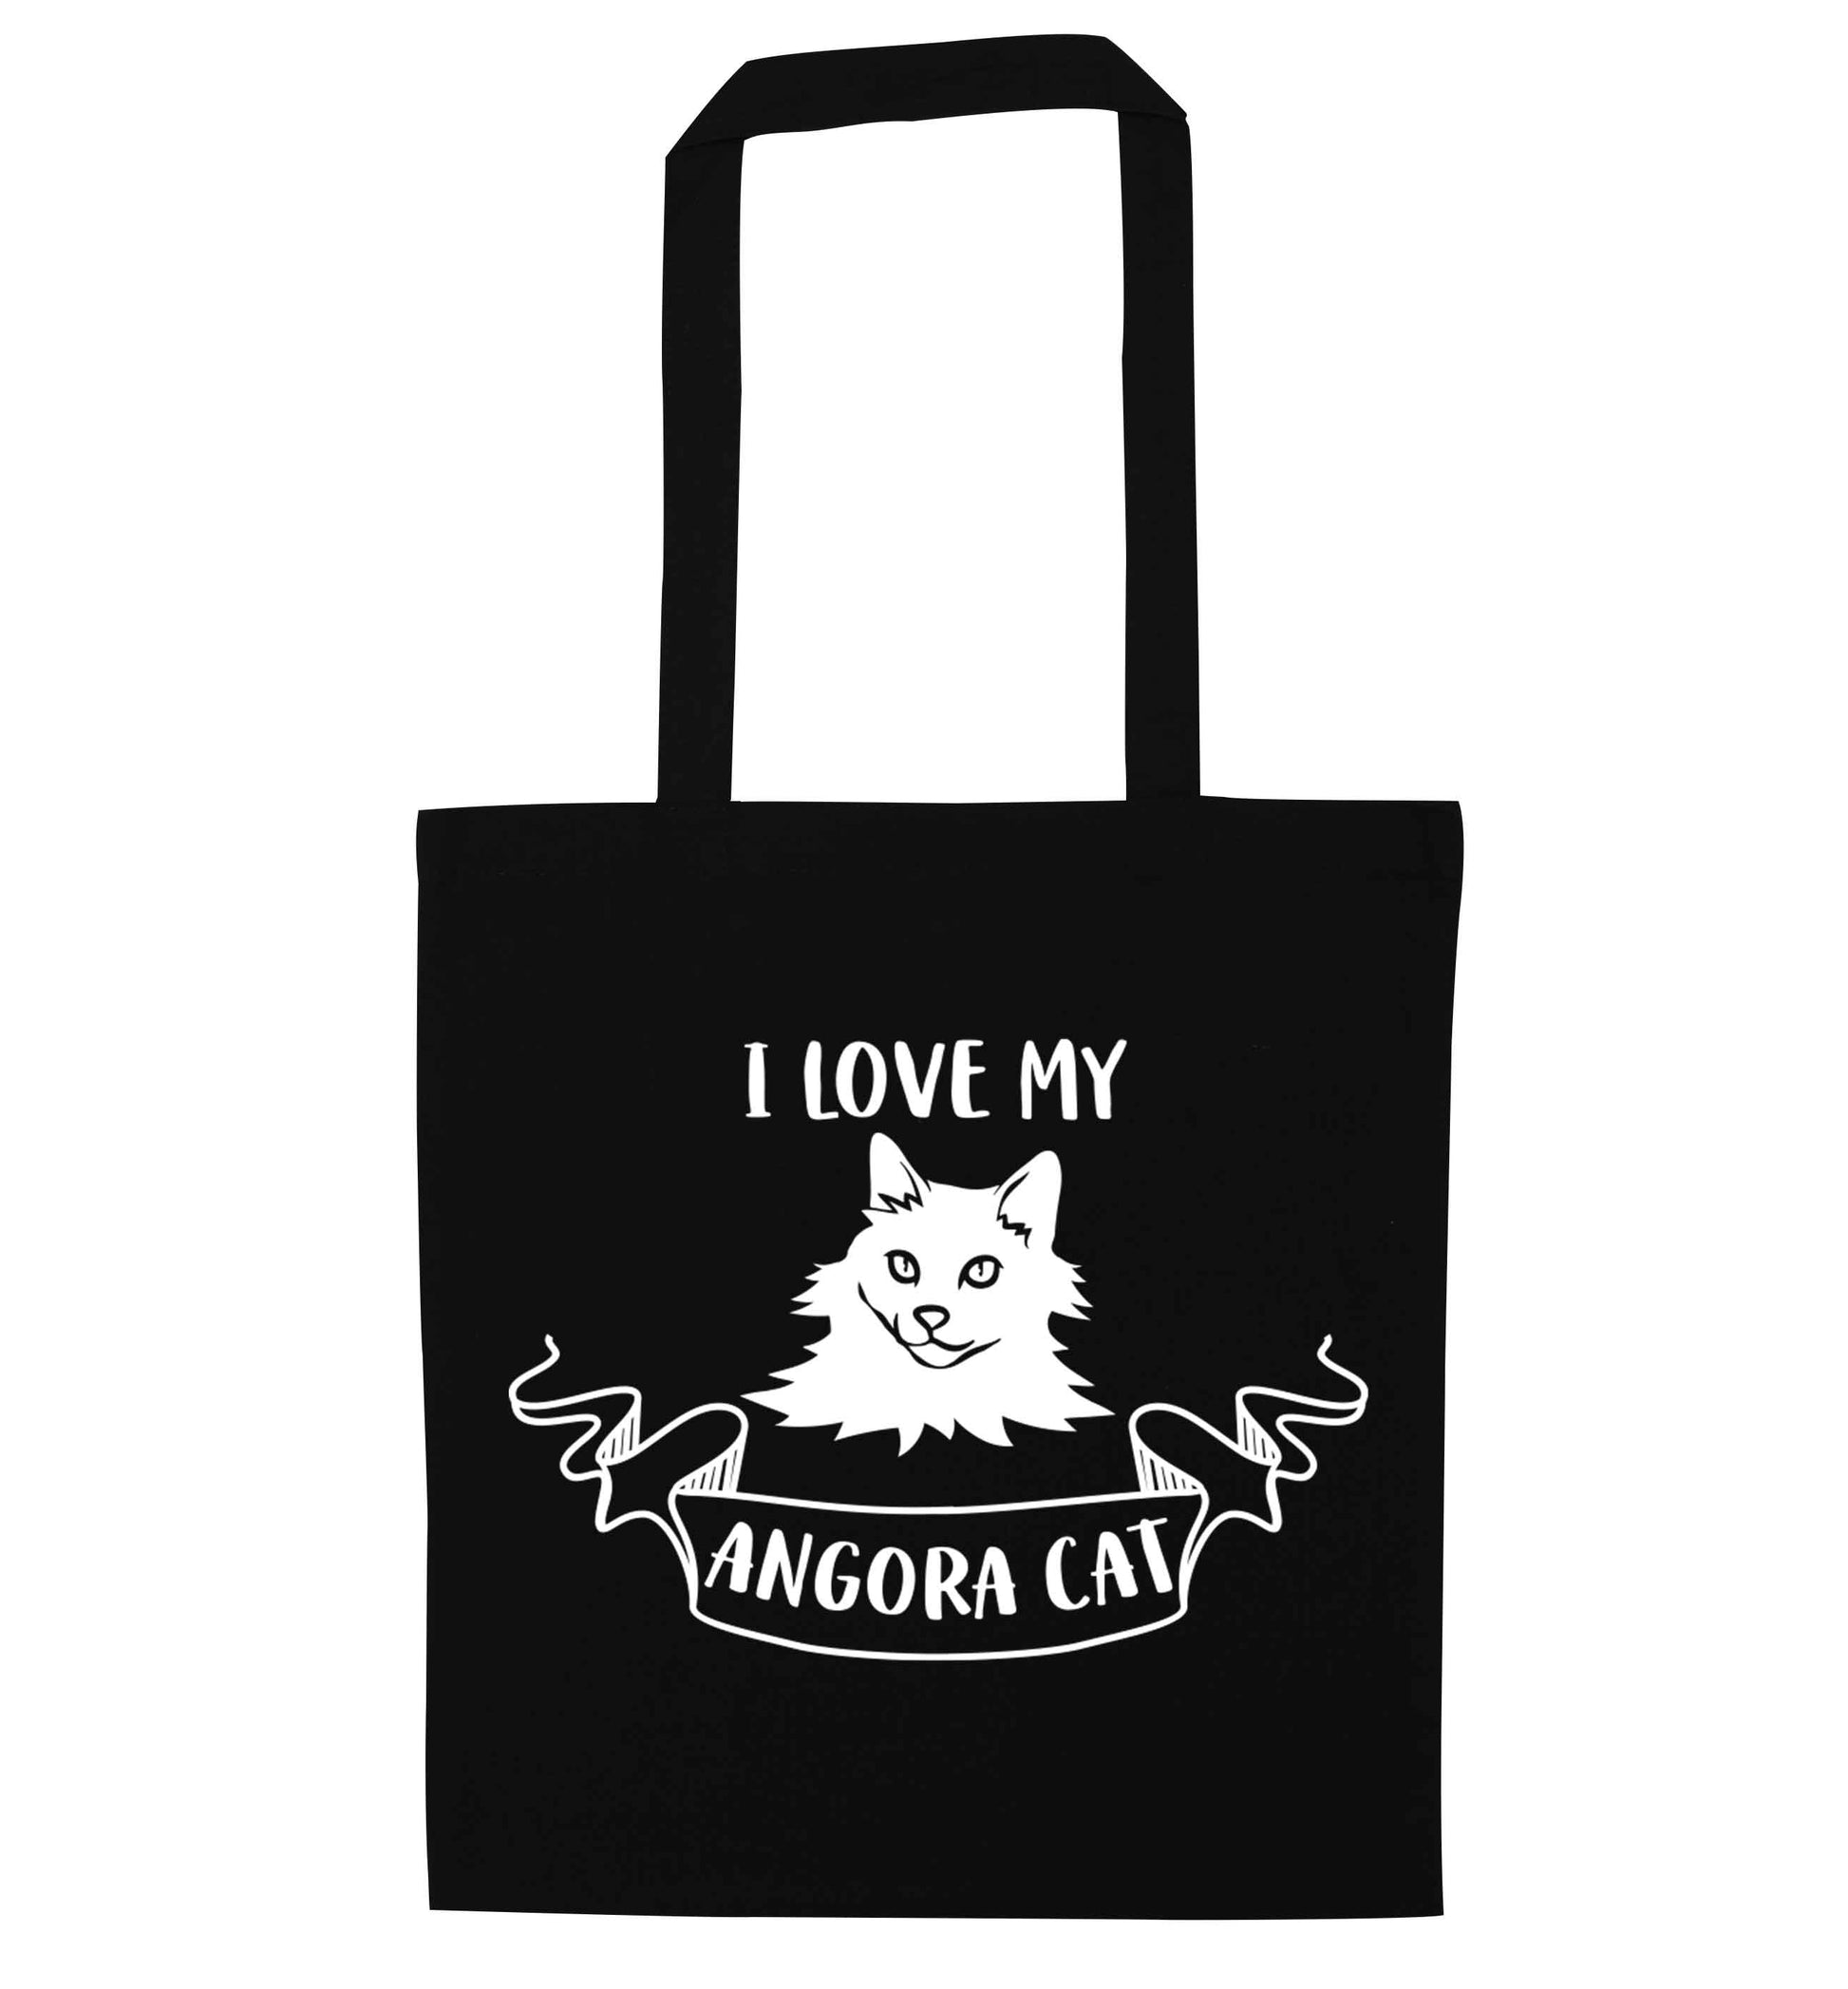 I love my angora cat black tote bag